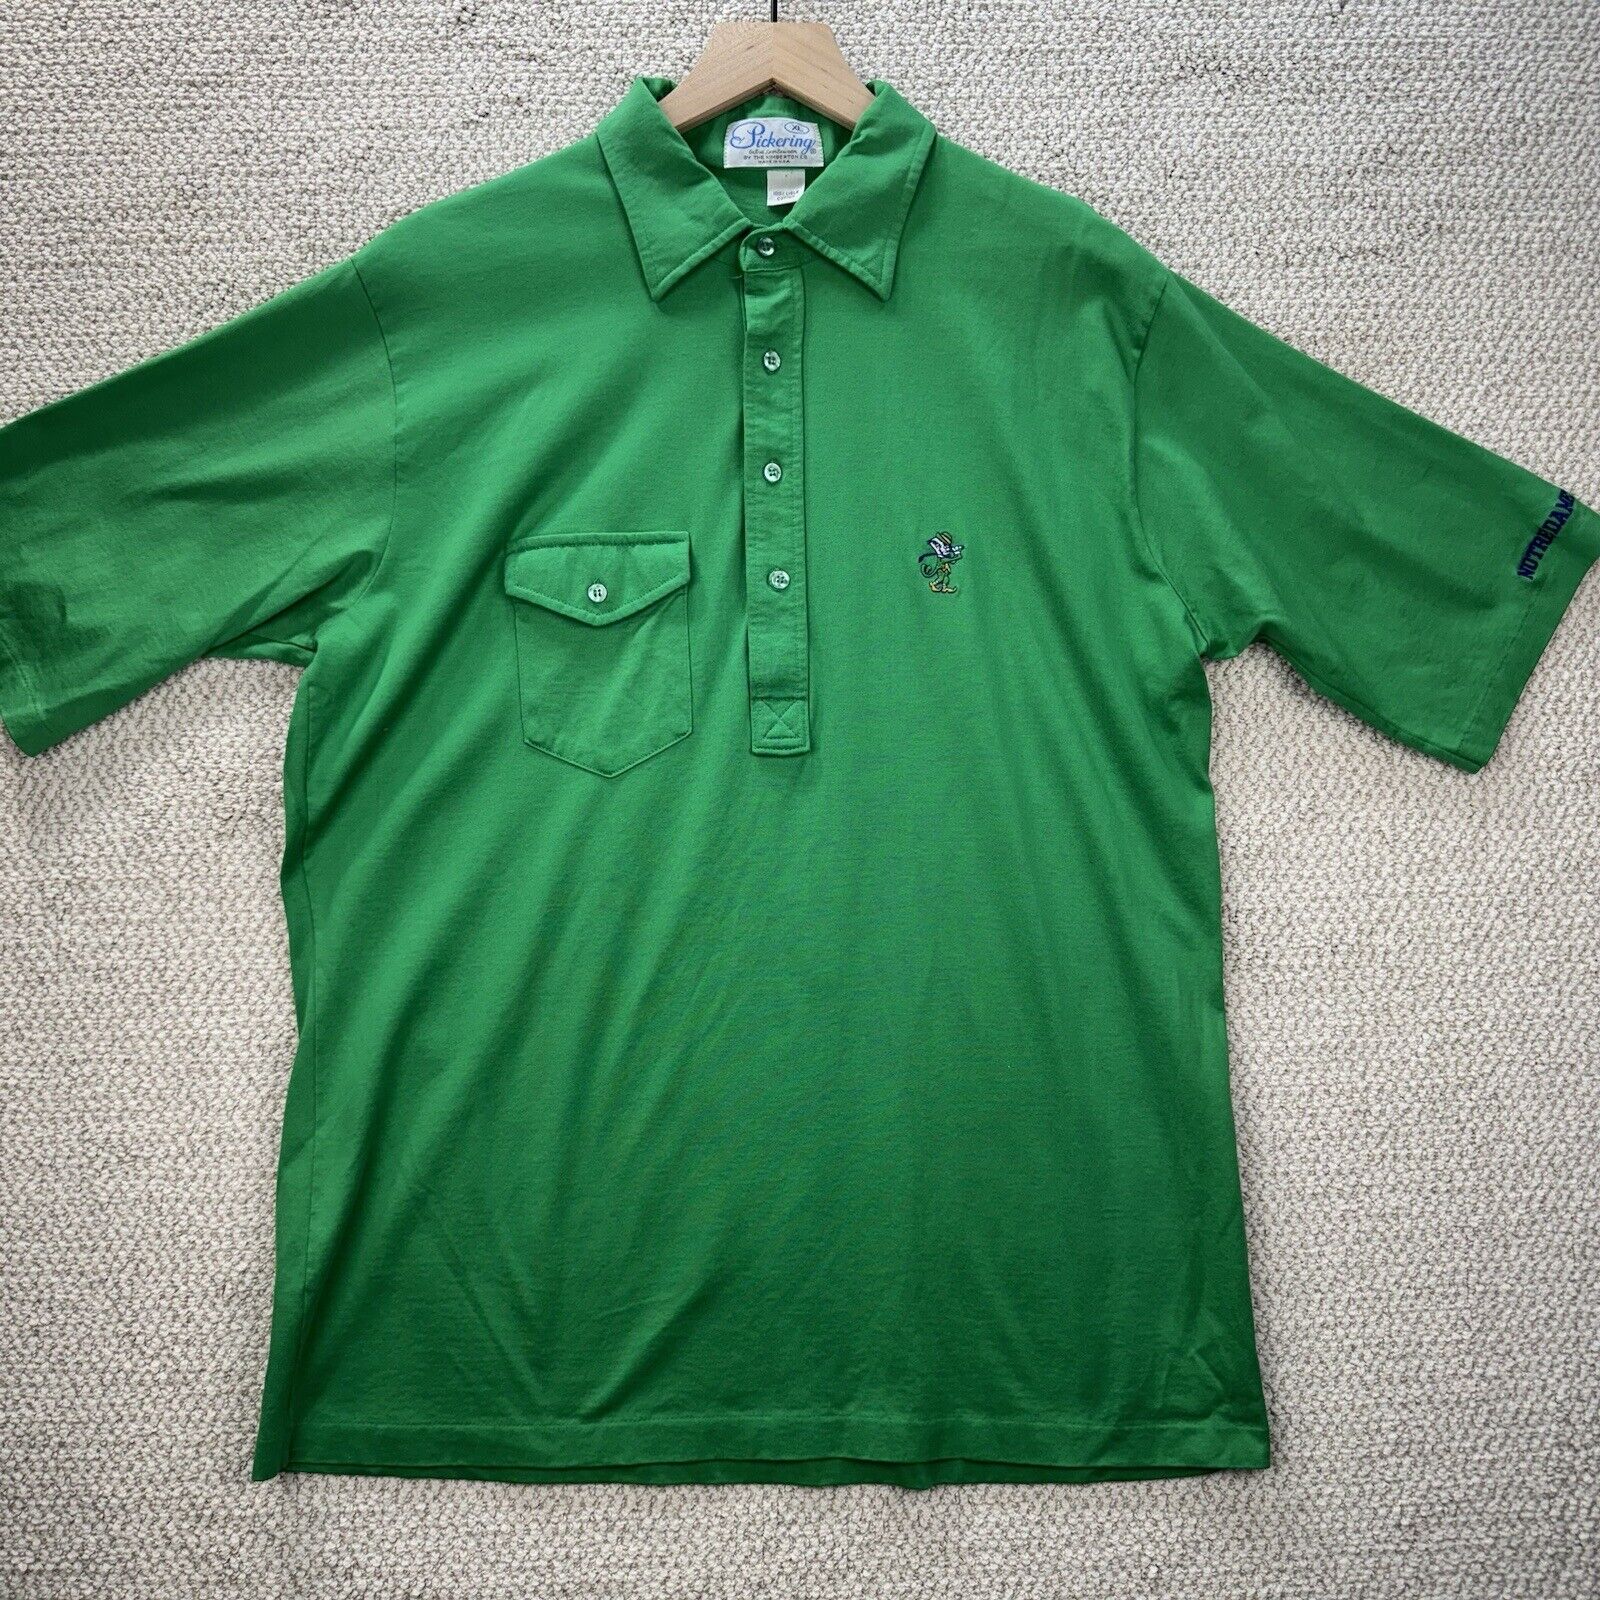 Vintage Pickering Polo Shirt Mens XL Green 100% Lisle Cotton Notre Dame